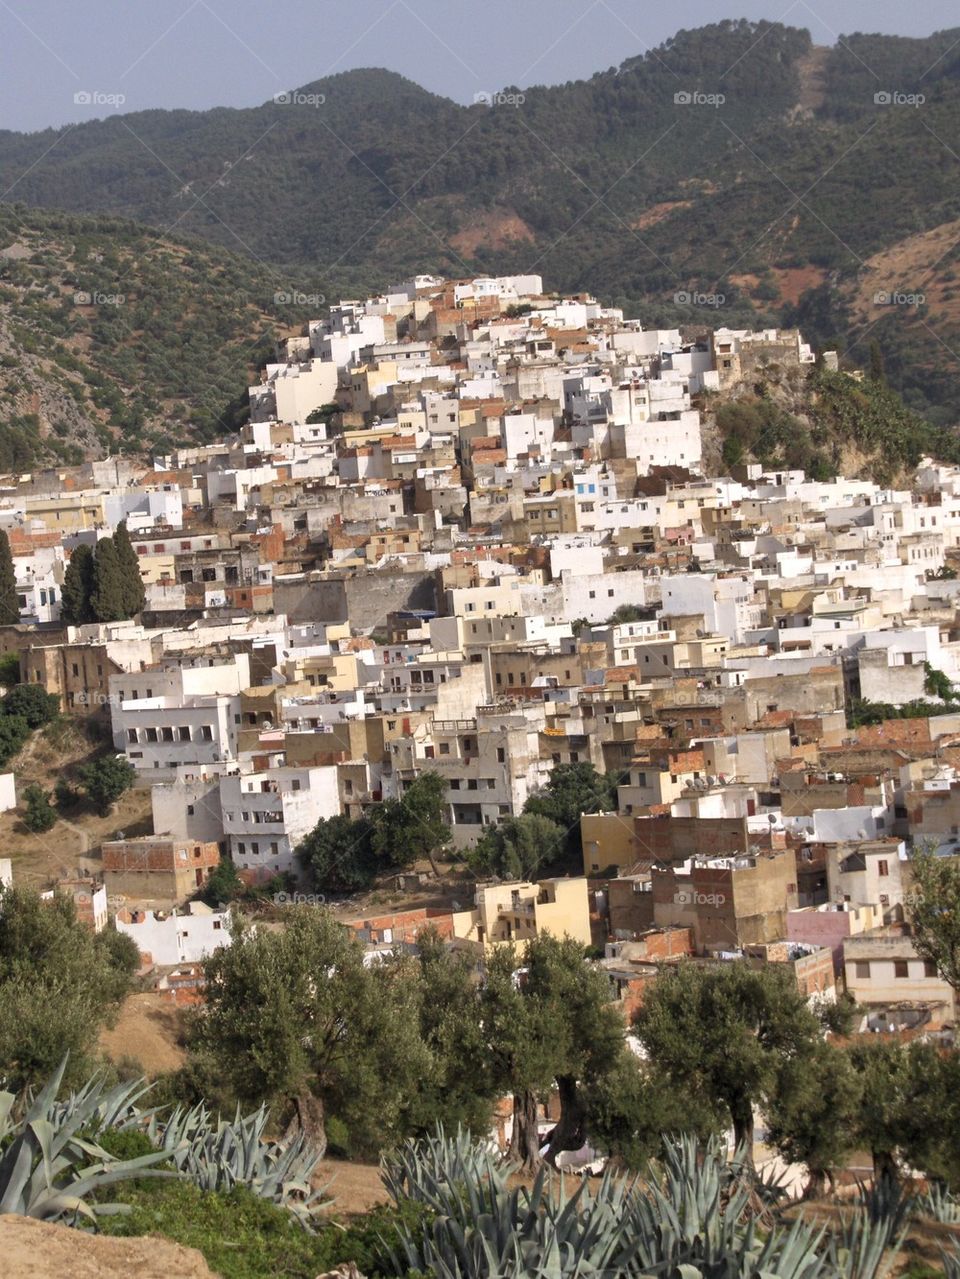 Rural morocco